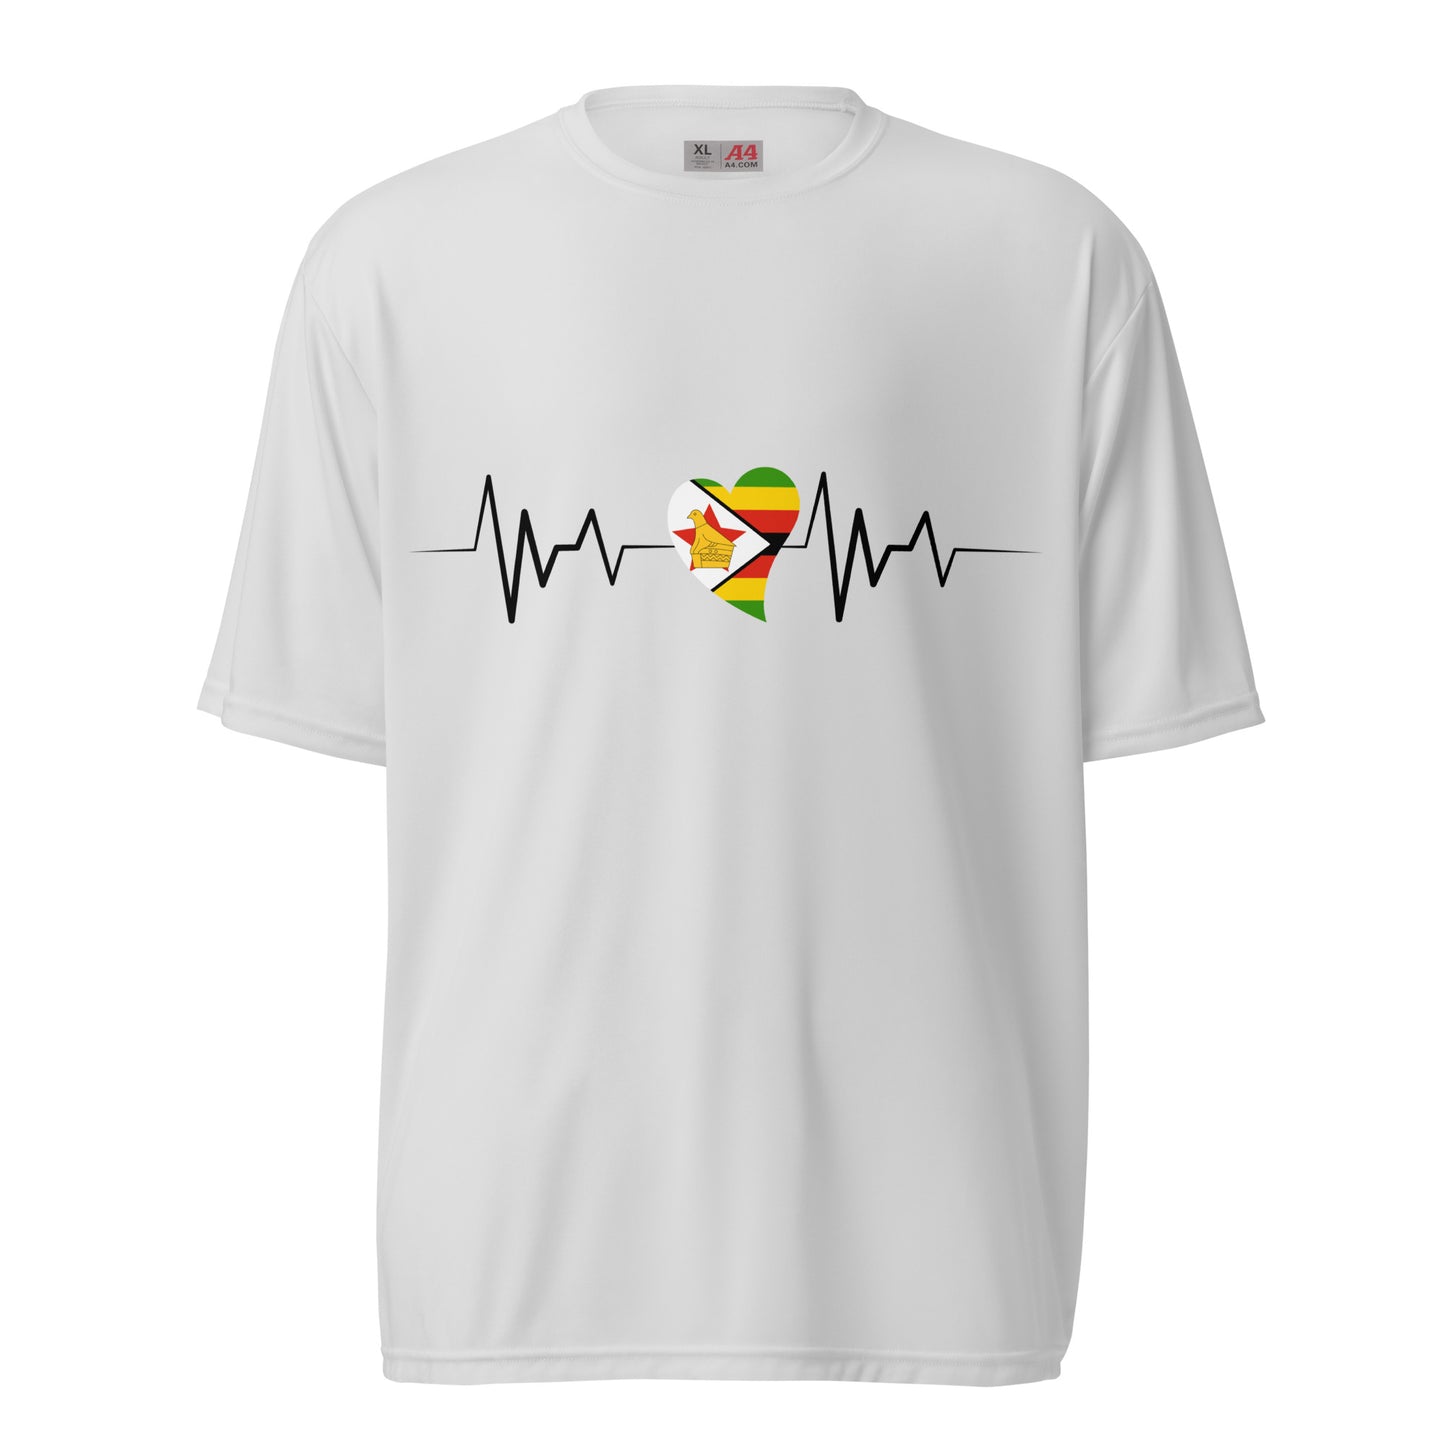 Unisex performance crew neck Zim Heartbeat (Black wave) t-shirt